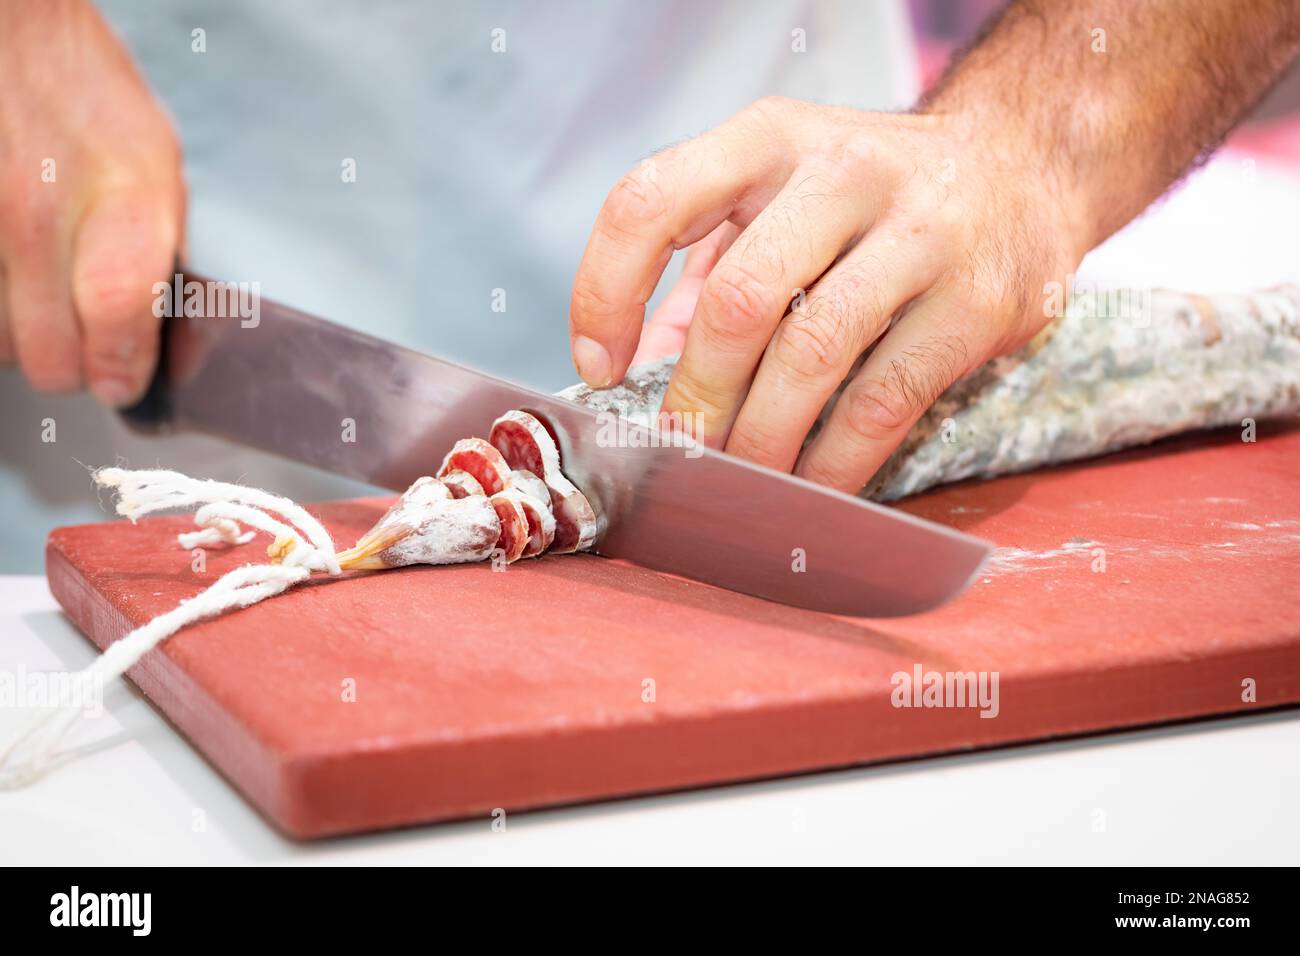 Man hands slicing llonganissa (cured & dried pork sausage) Stock Photo